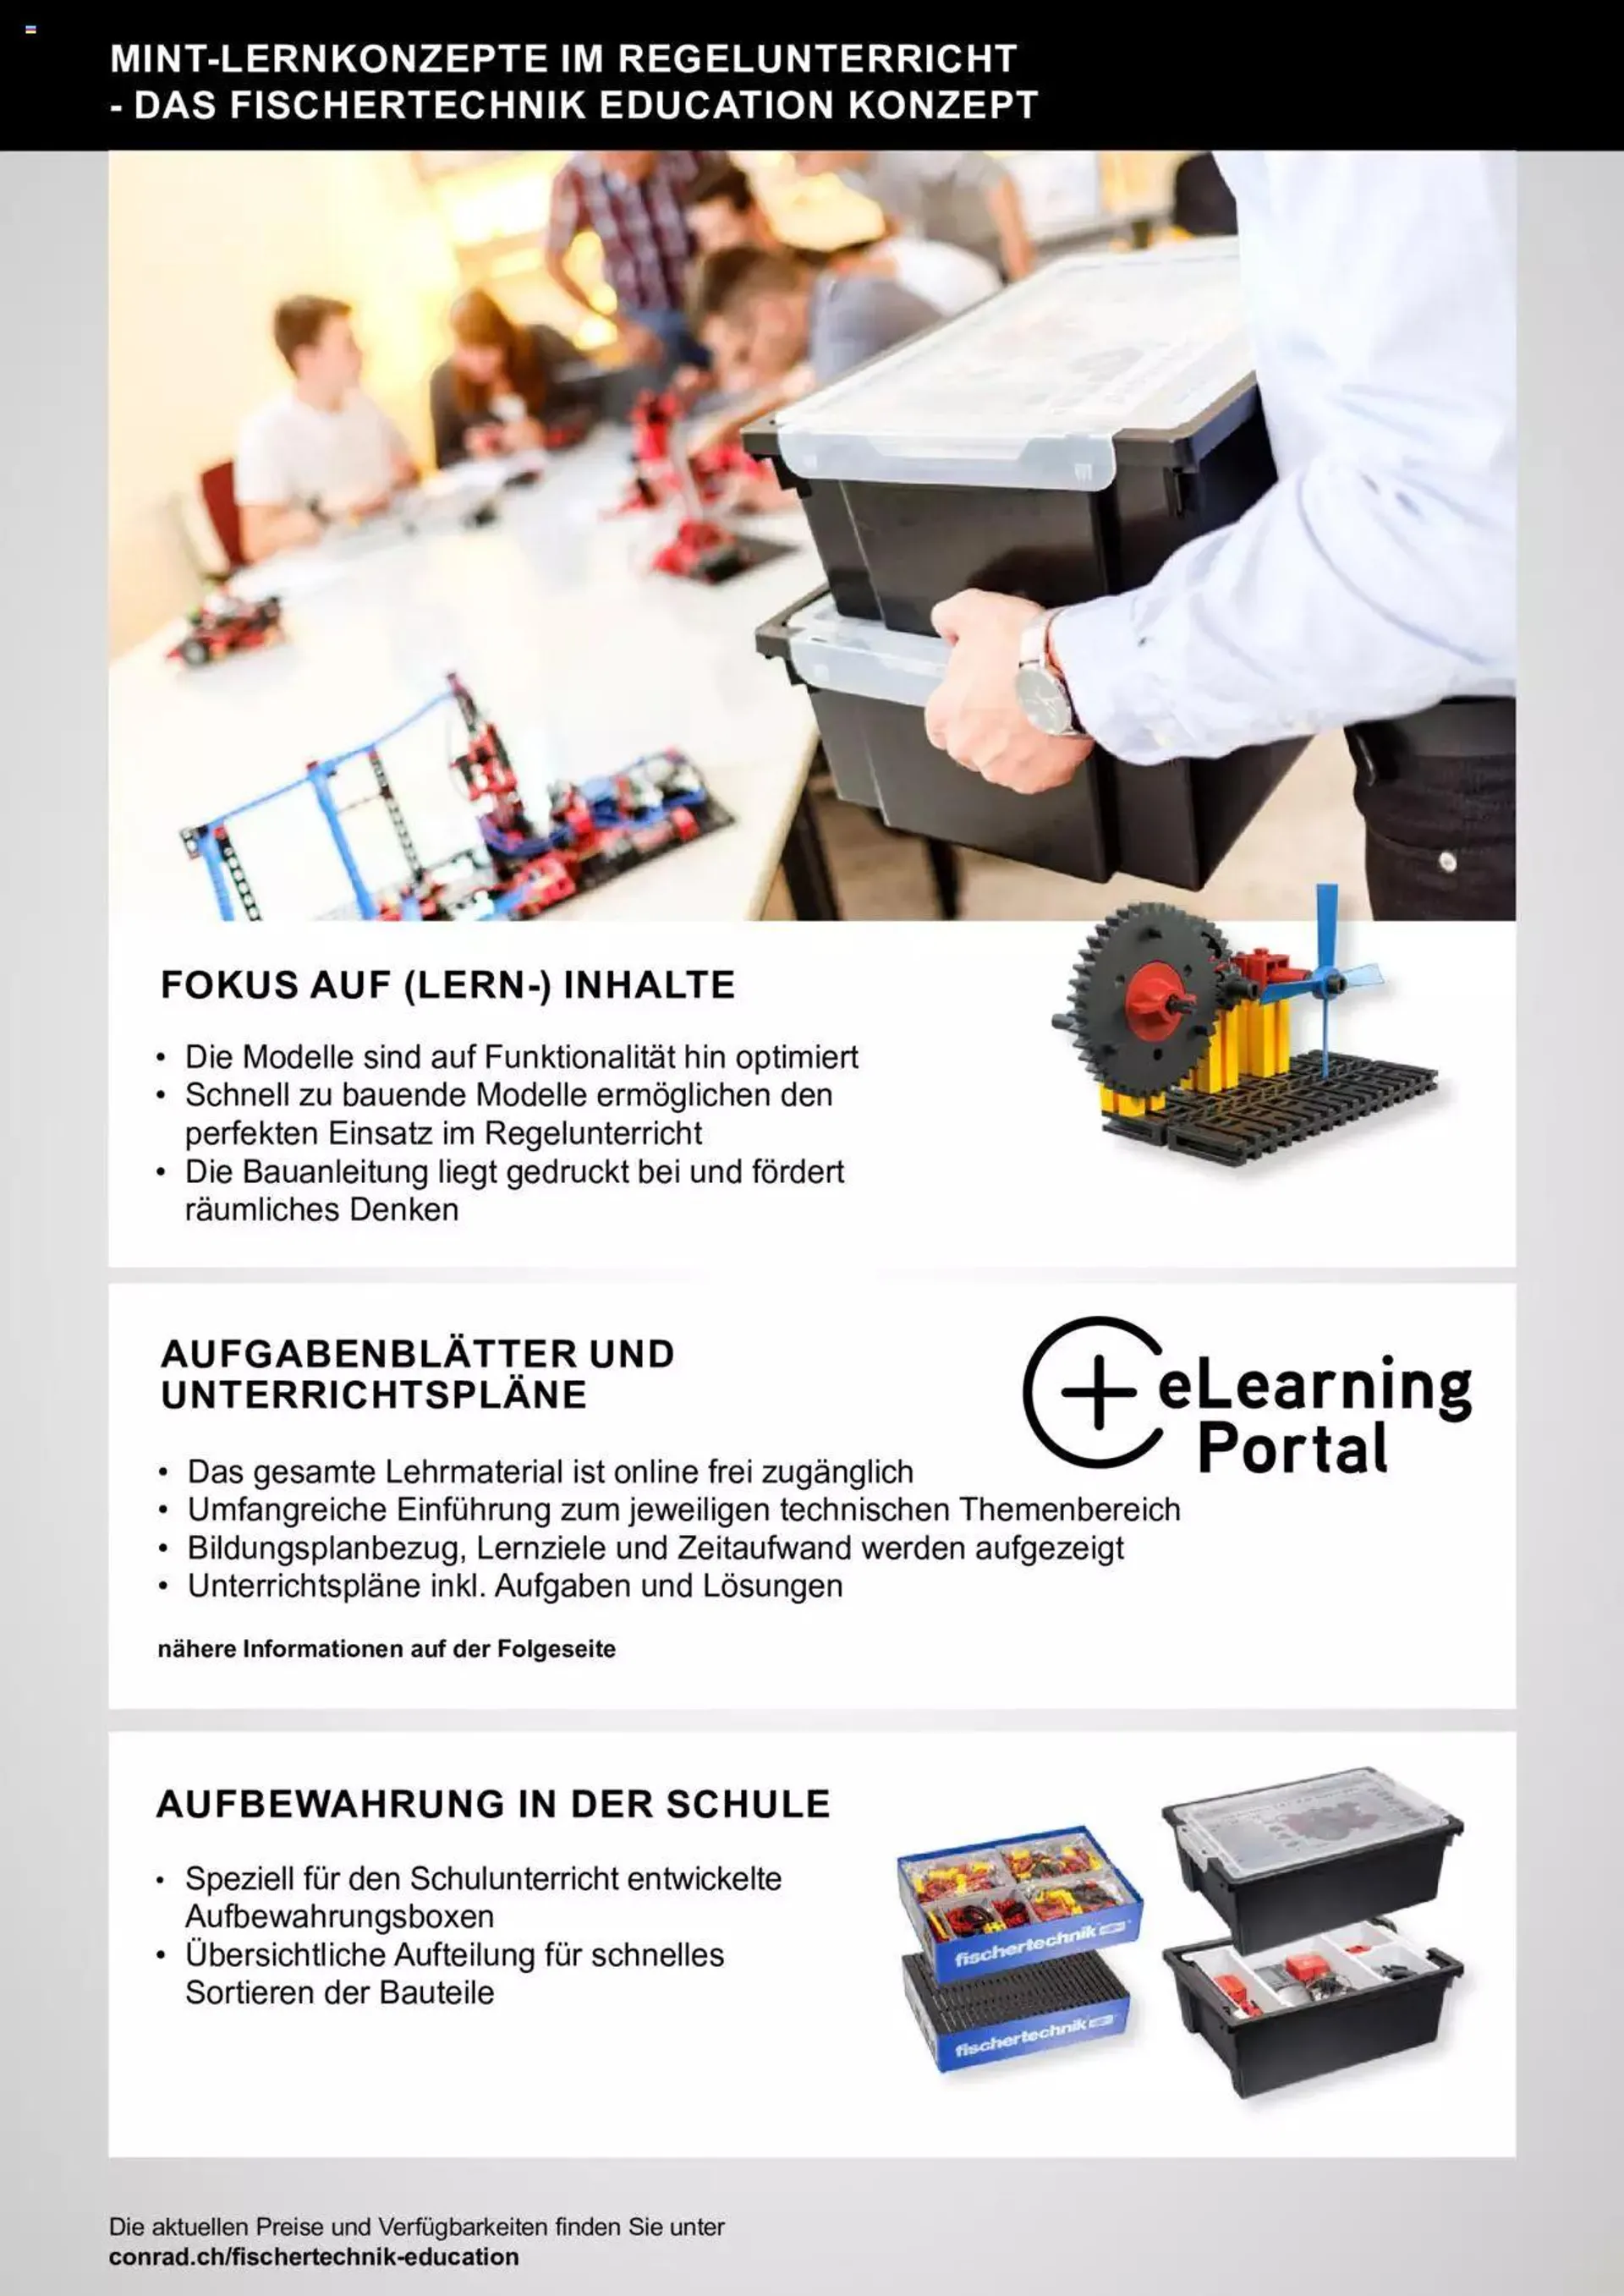 Conrad Fischertechnik education - 3